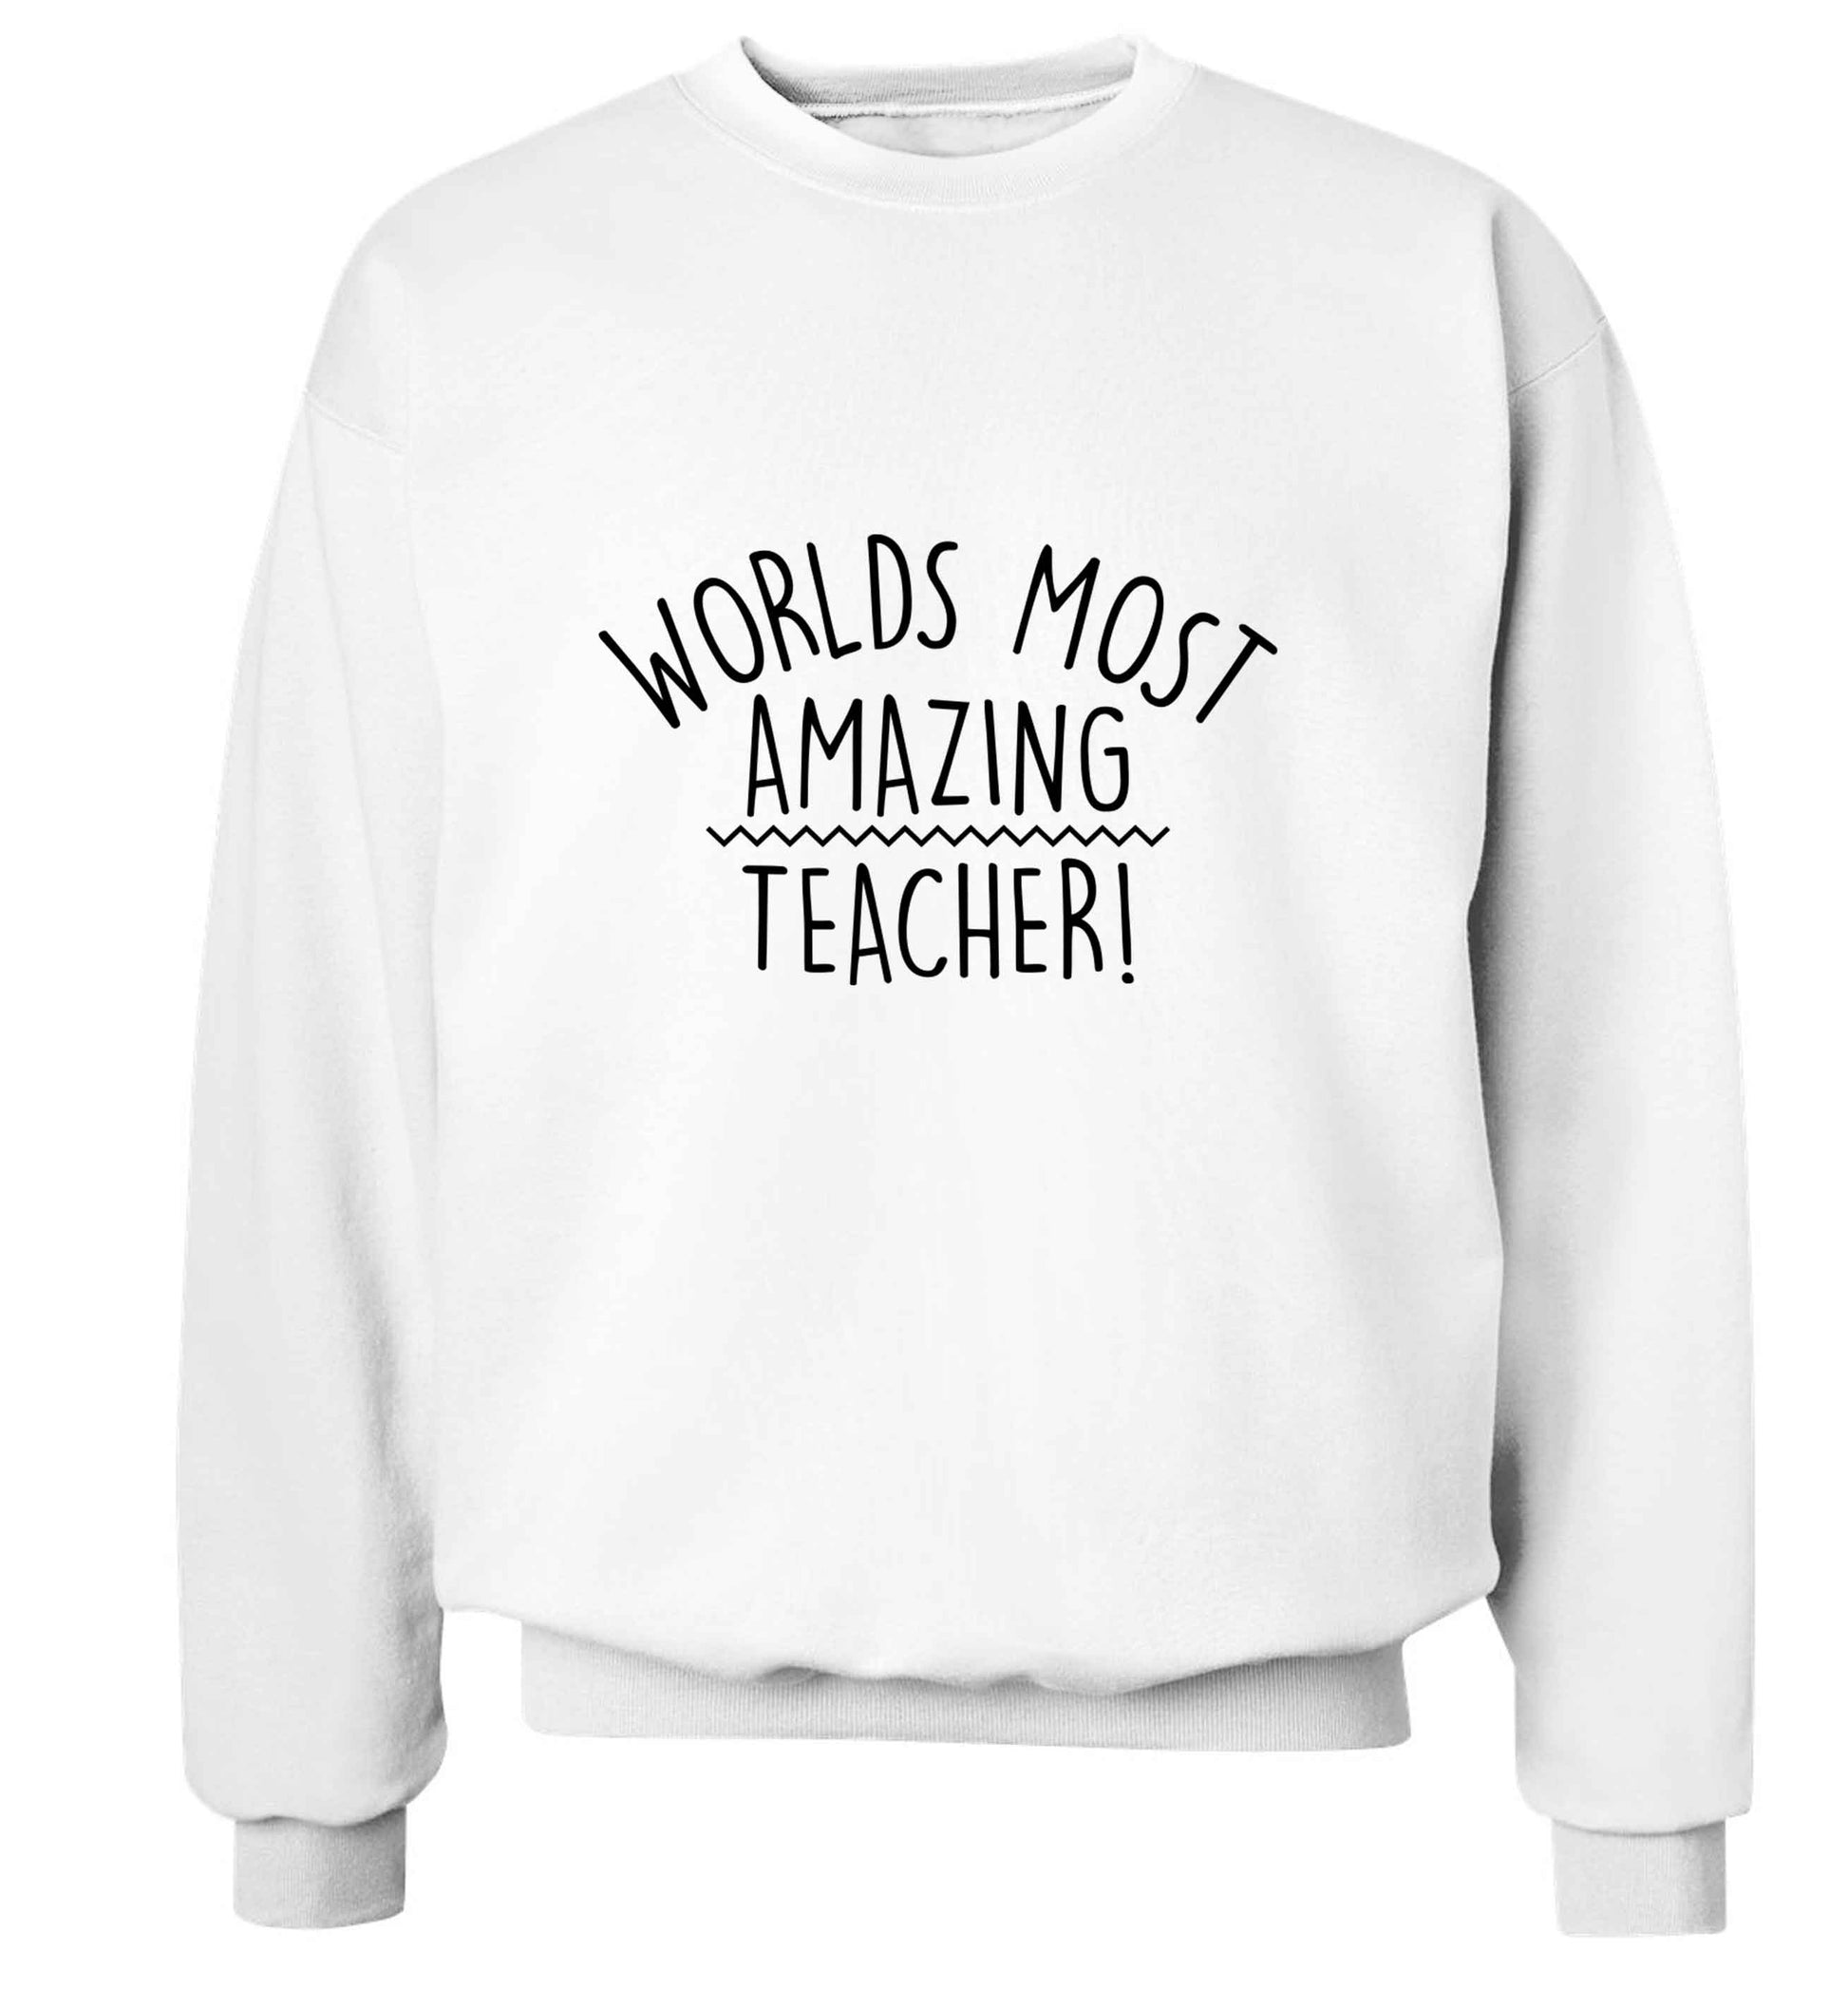 Worlds most amazing teacher adult's unisex white sweater 2XL